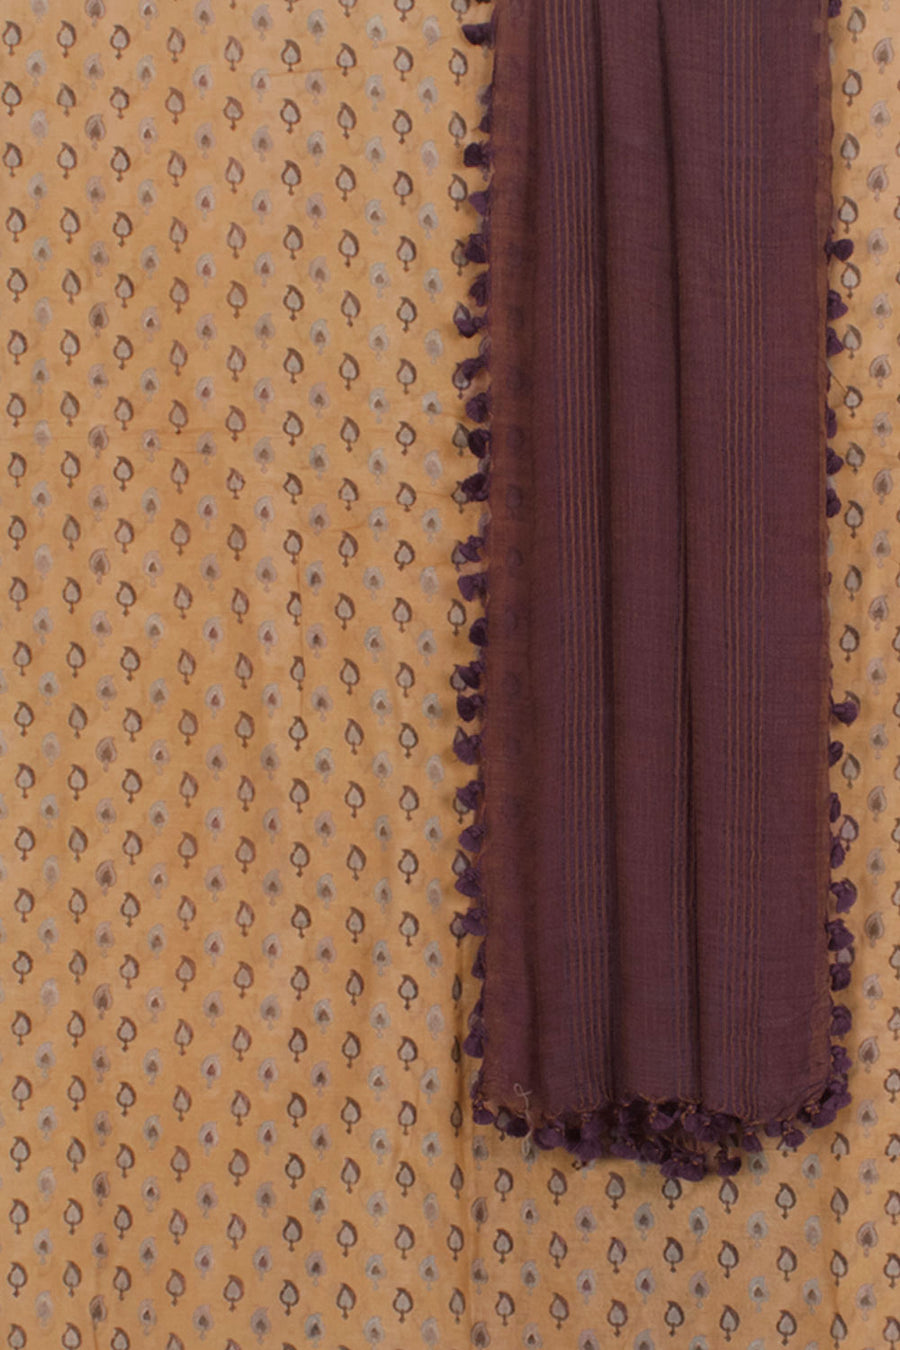 Digital Printed Chanderi Silk Cotton 2-Piece Salwar Suit Material with Handloom Dupatta